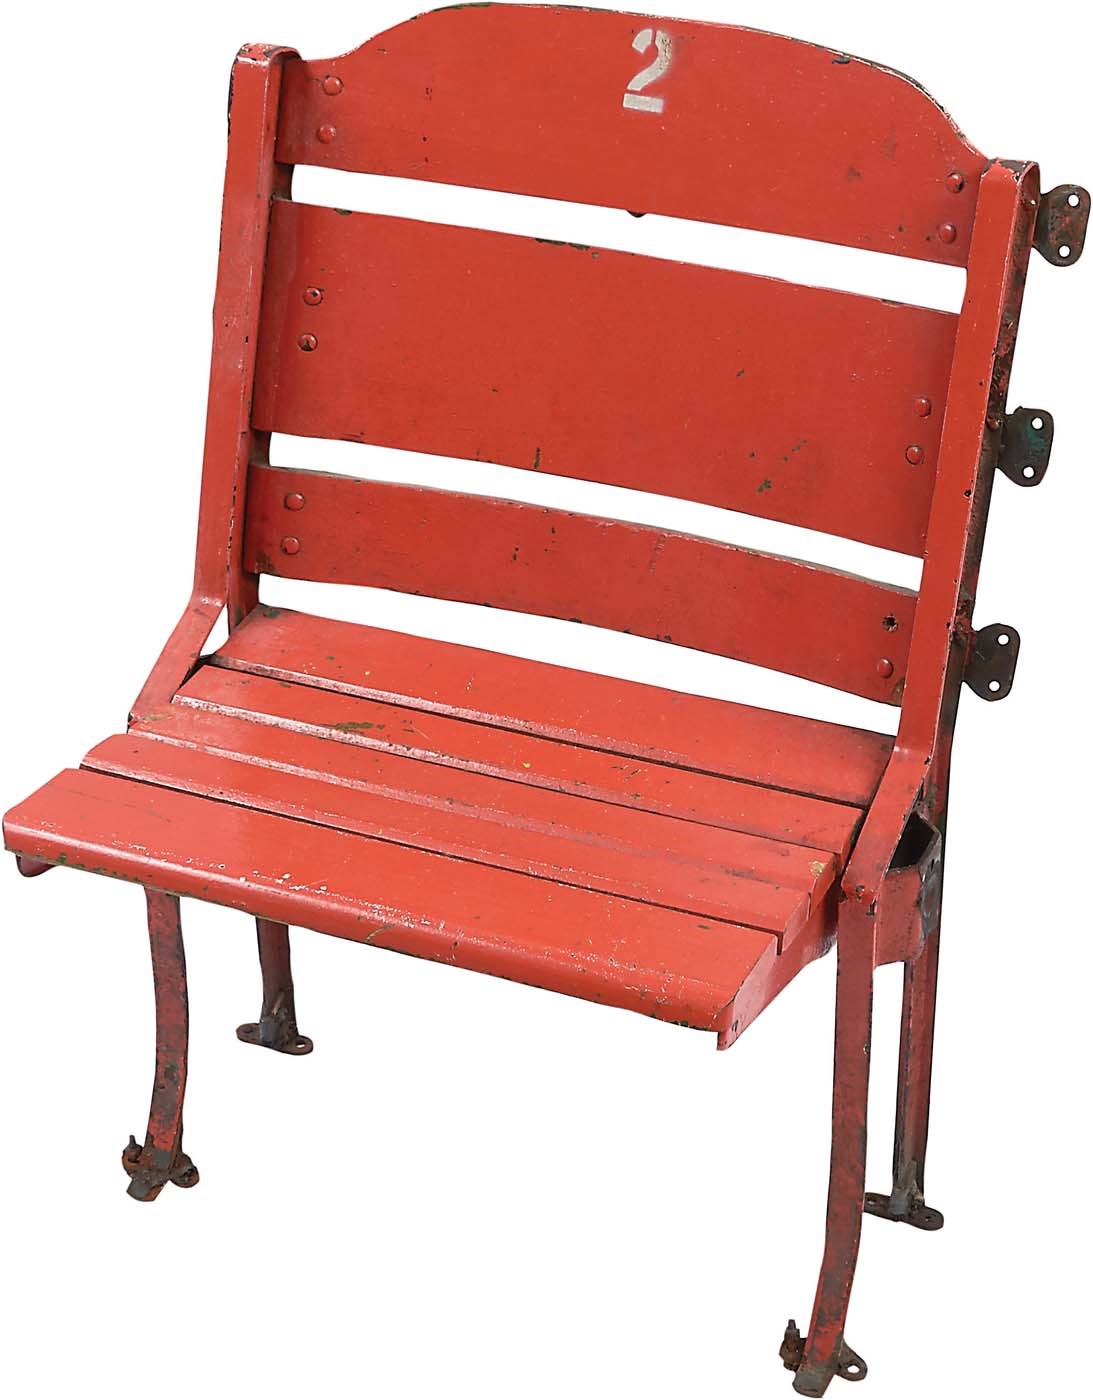 Original Boston Garden Seat